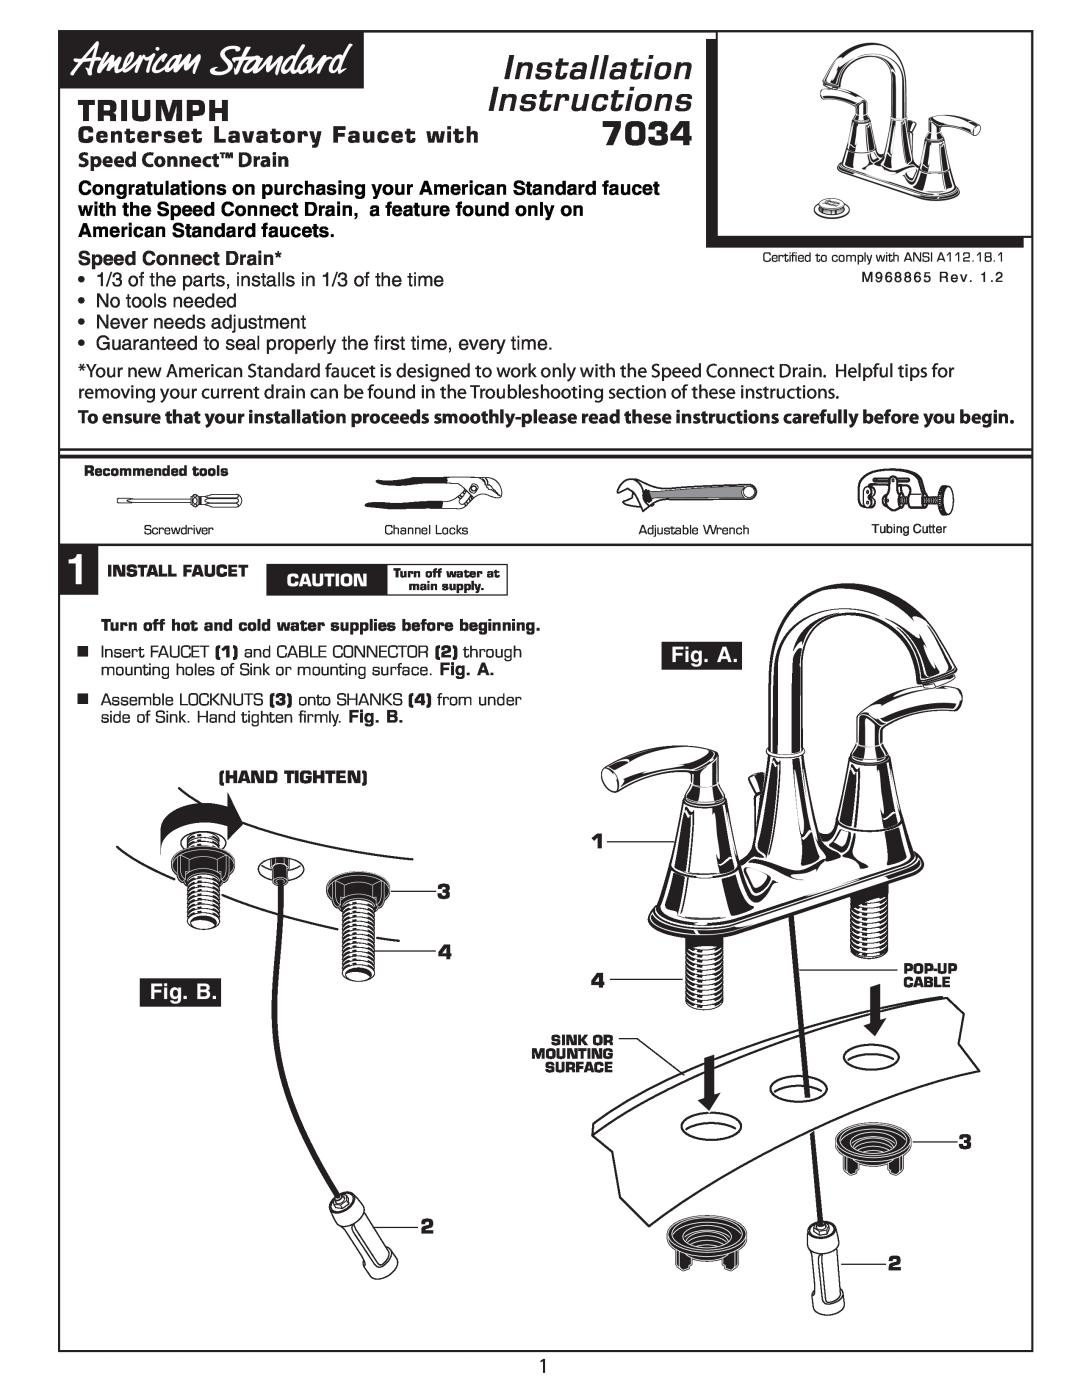 American Standard 7034 installation instructions Fig. B, Installation, Instructions, Triumph, Speed Connect Drain 